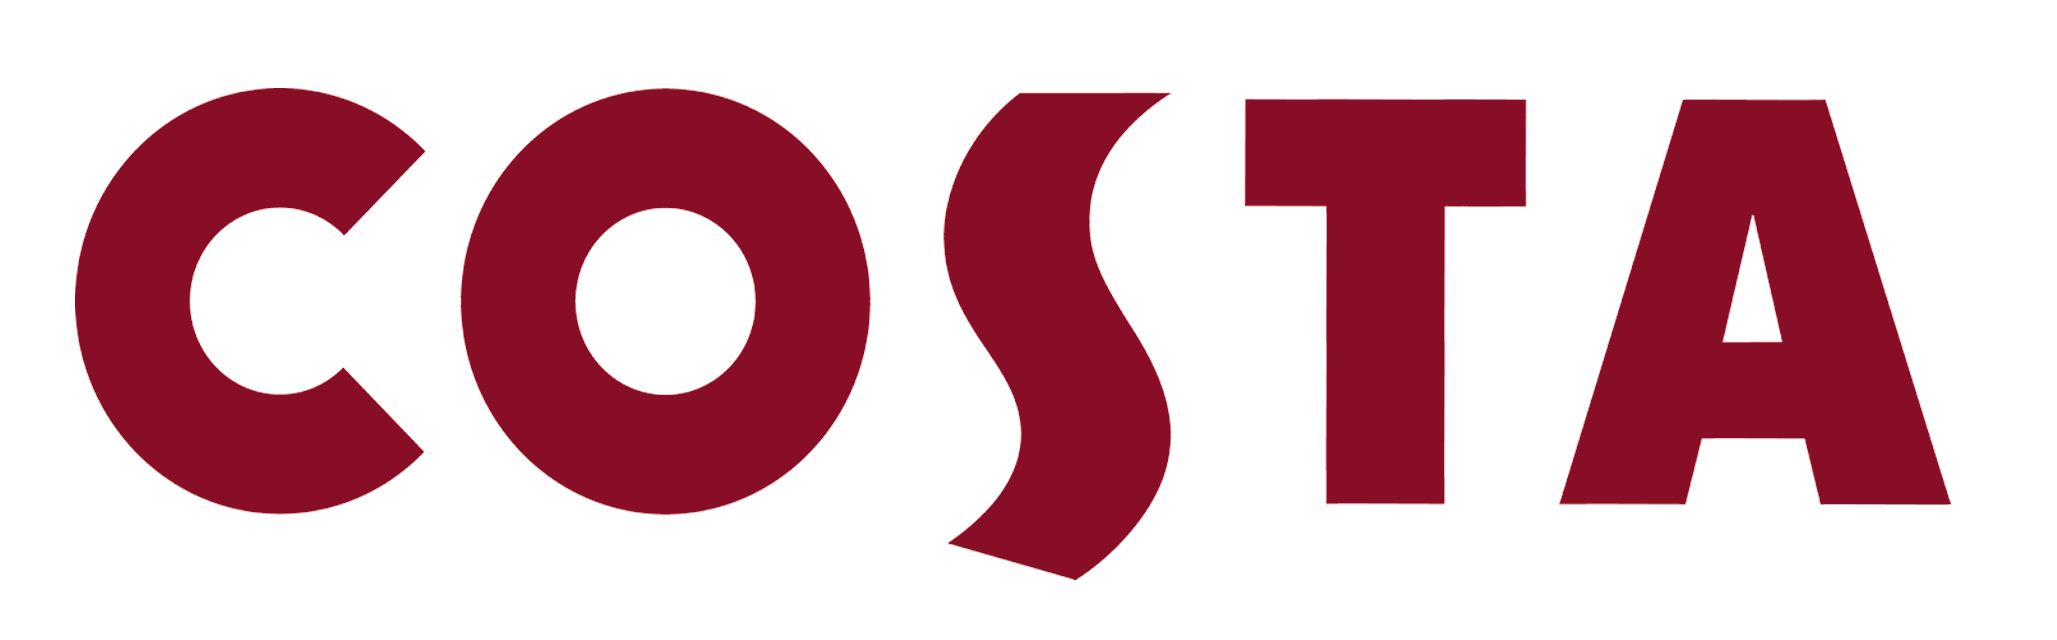 Costa Logo - Costa Coffee – Logos Download